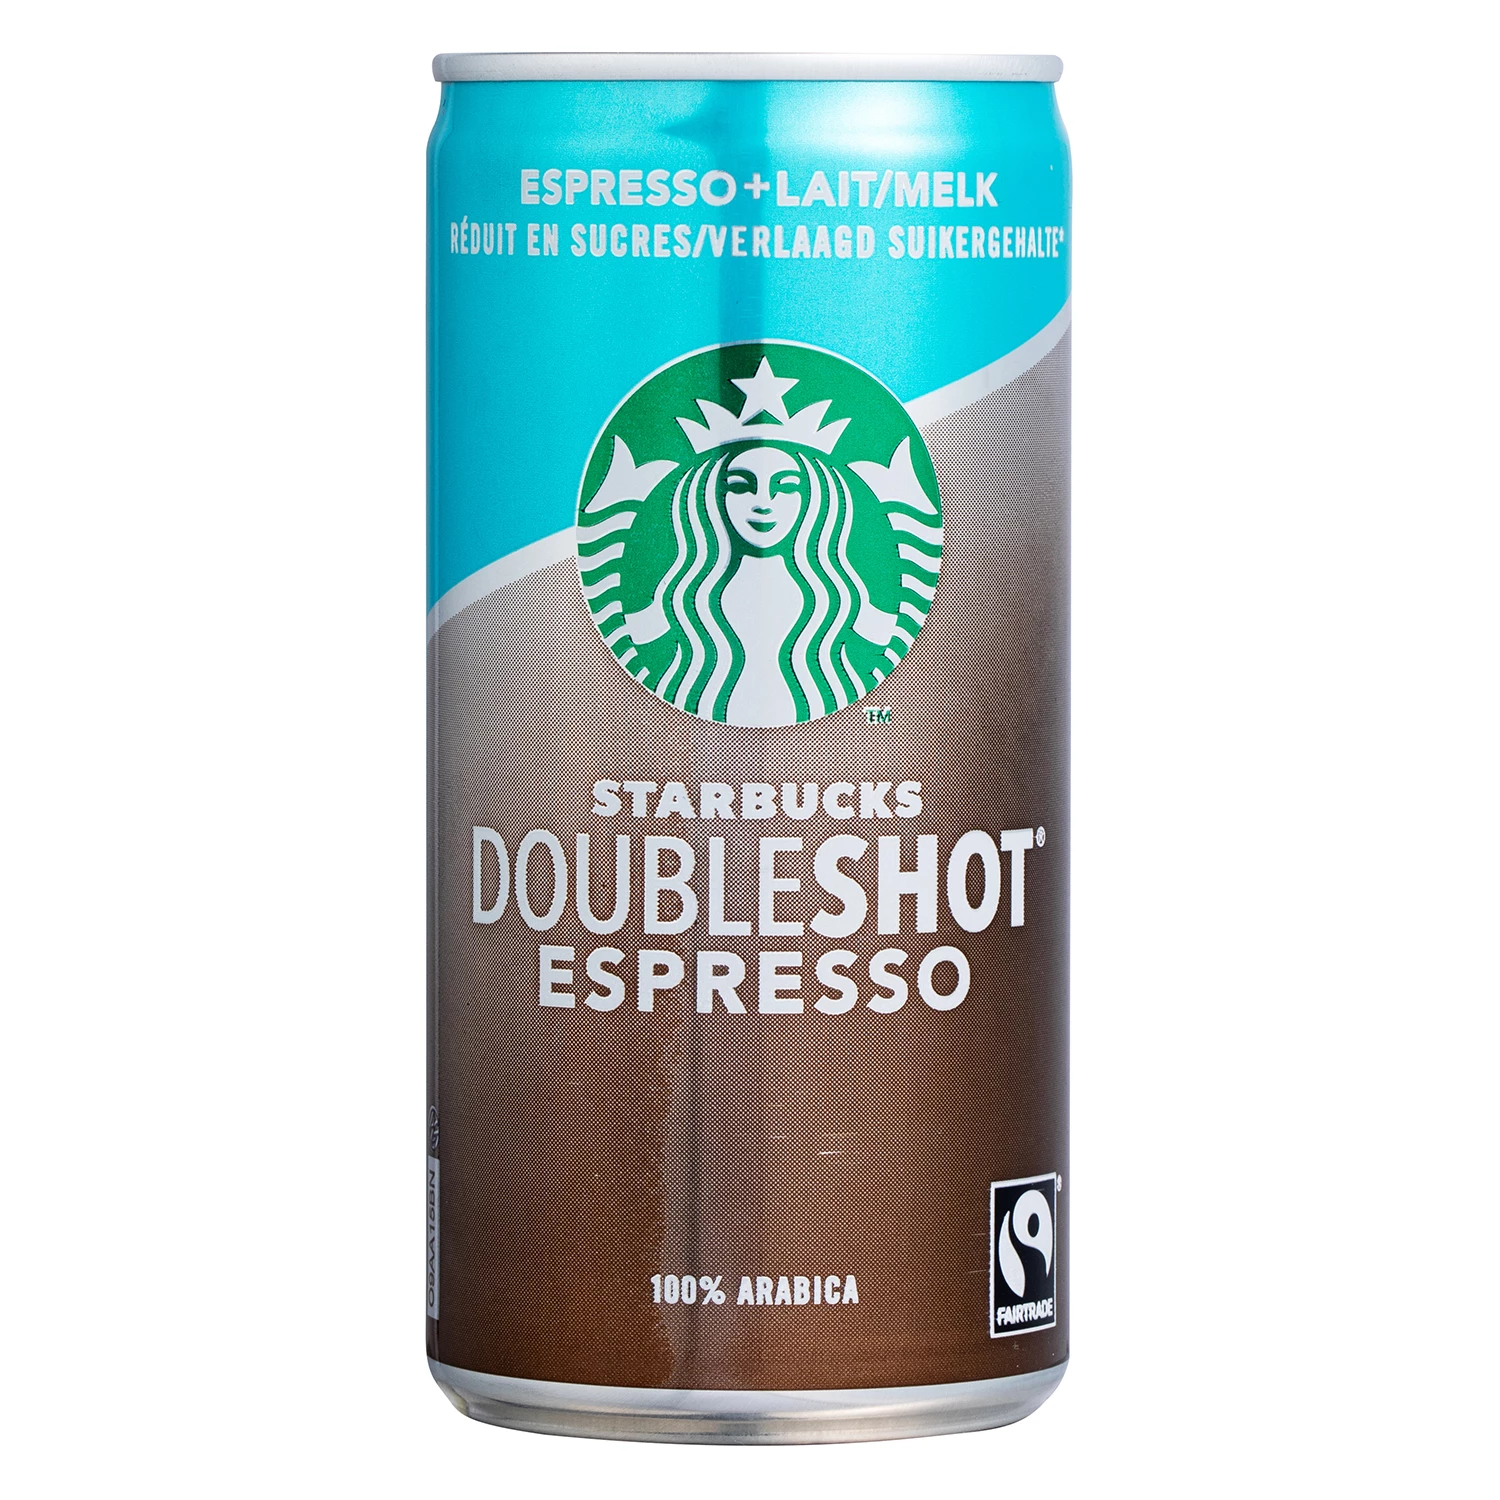 Doubleshot Espresso reducido en azúcares 200ml - STARBUCKS